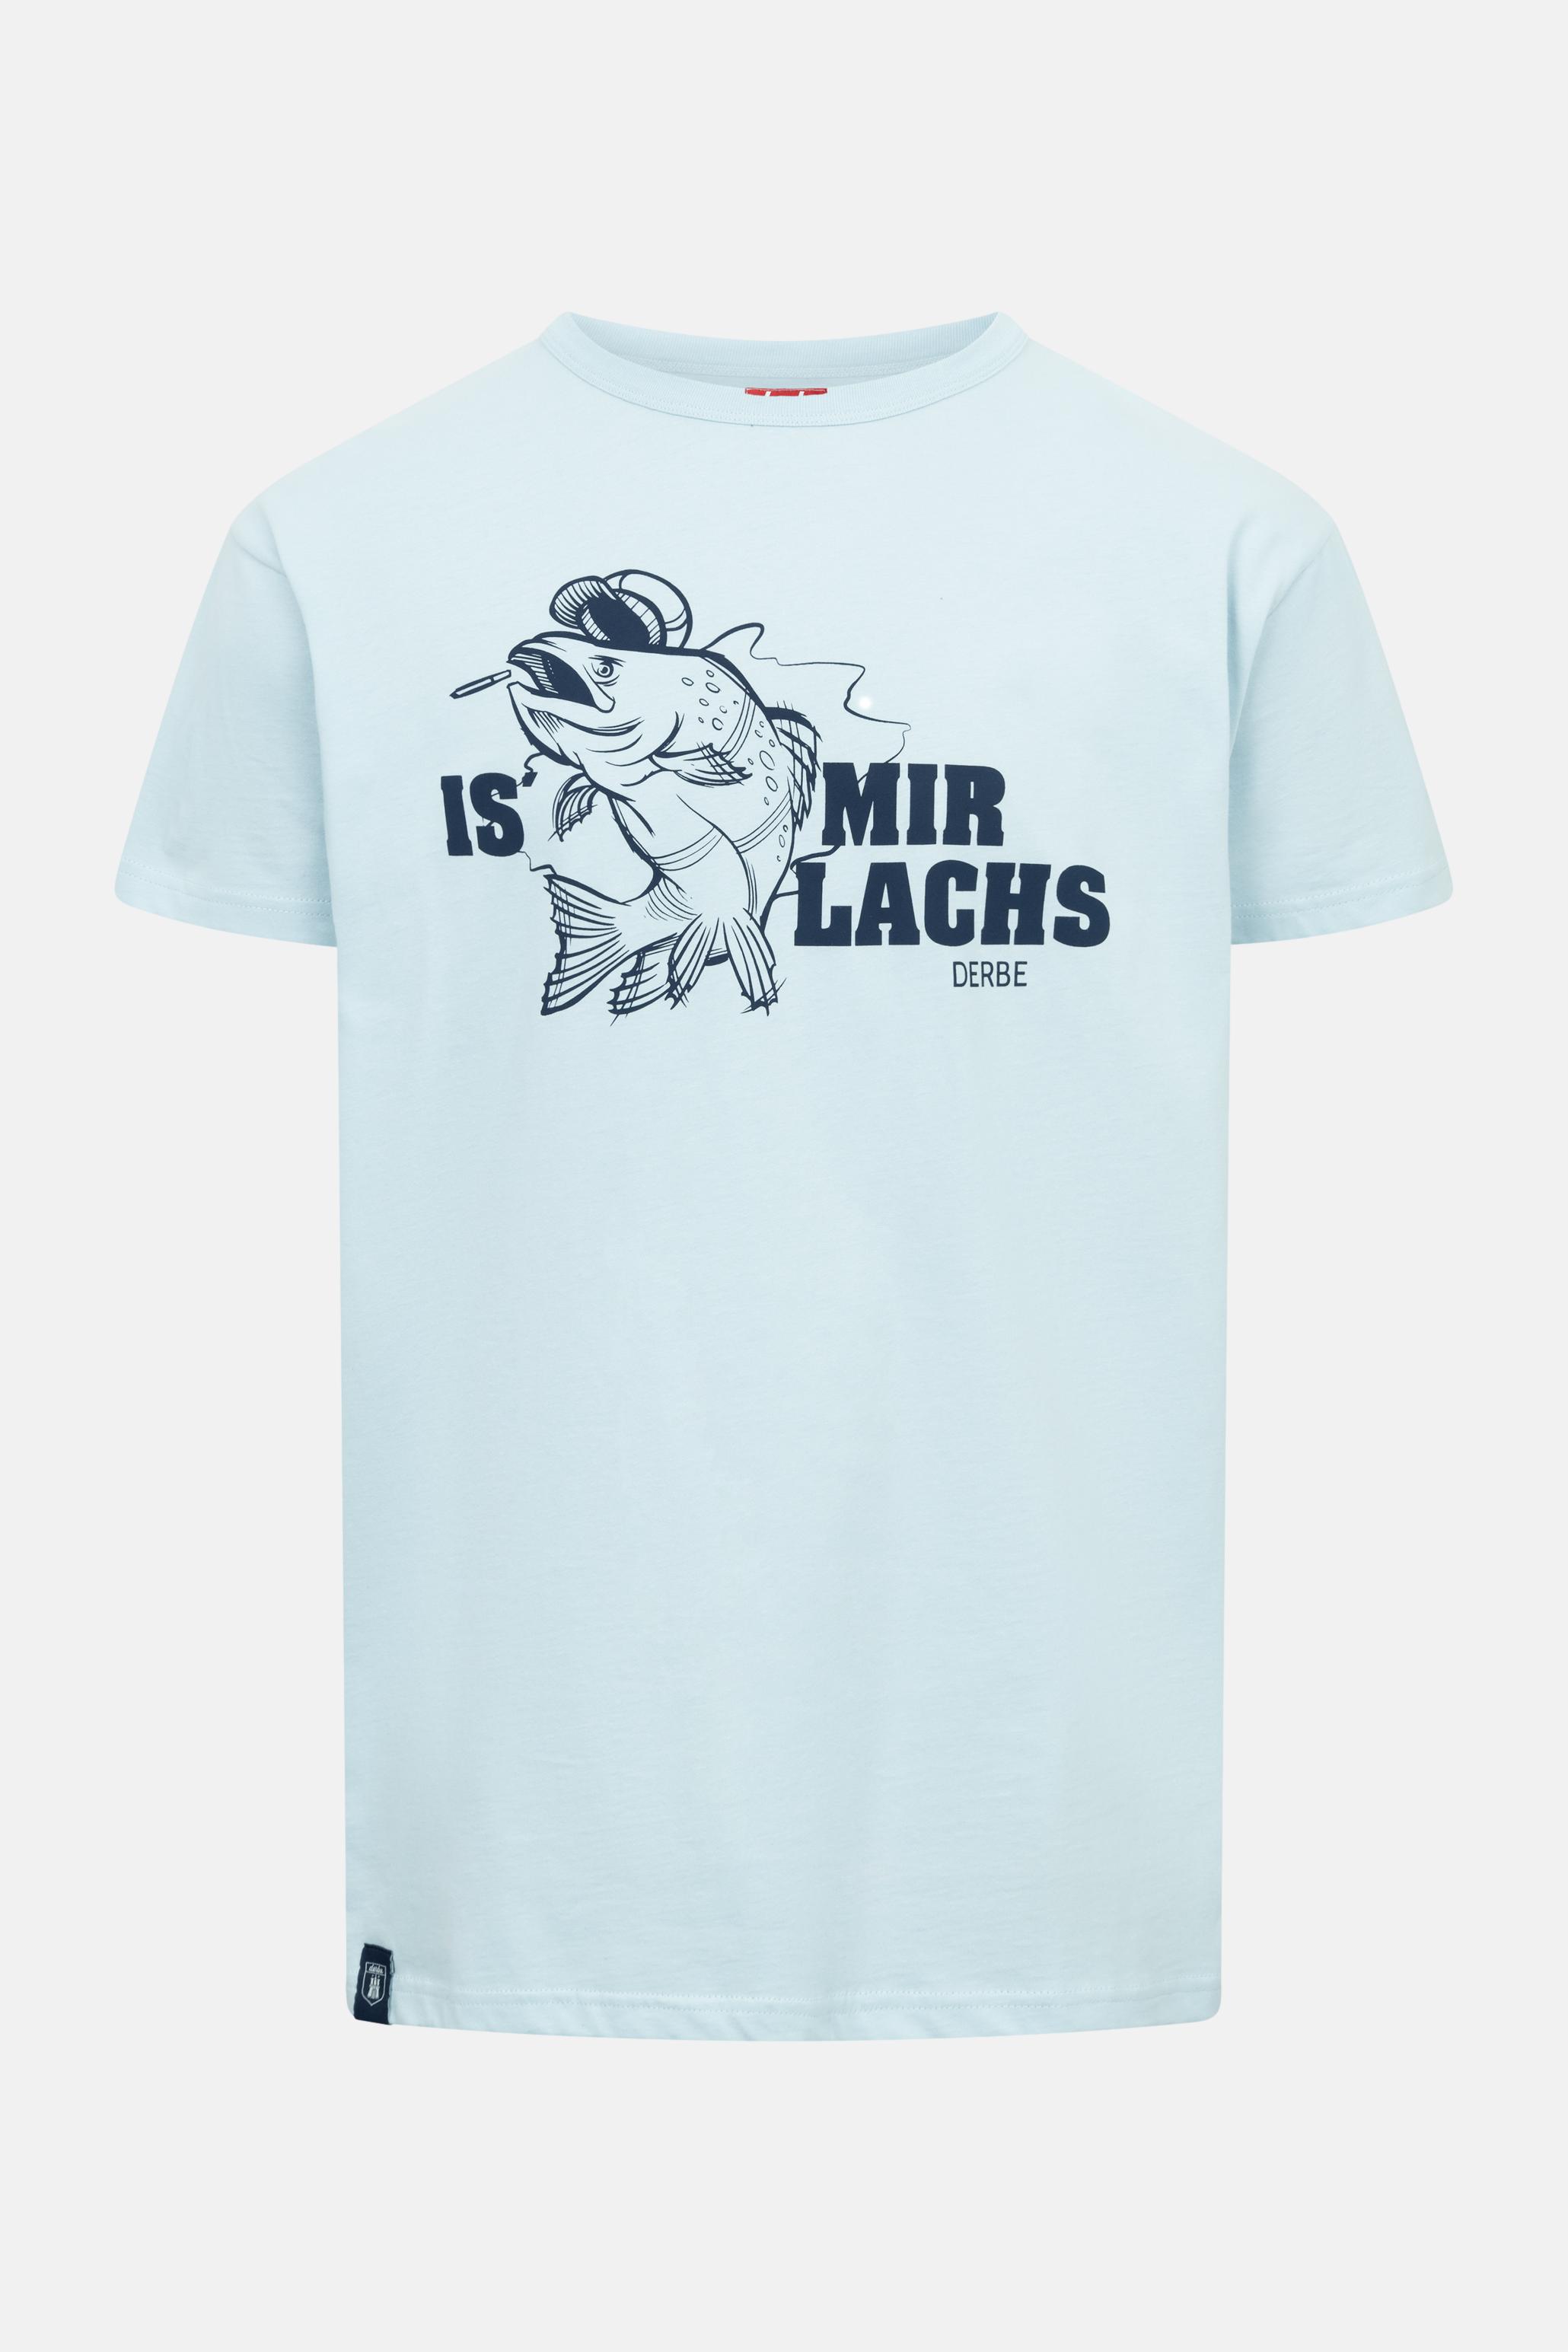 Derbe T-Shirt Is mir Hellblau Herren Lachs